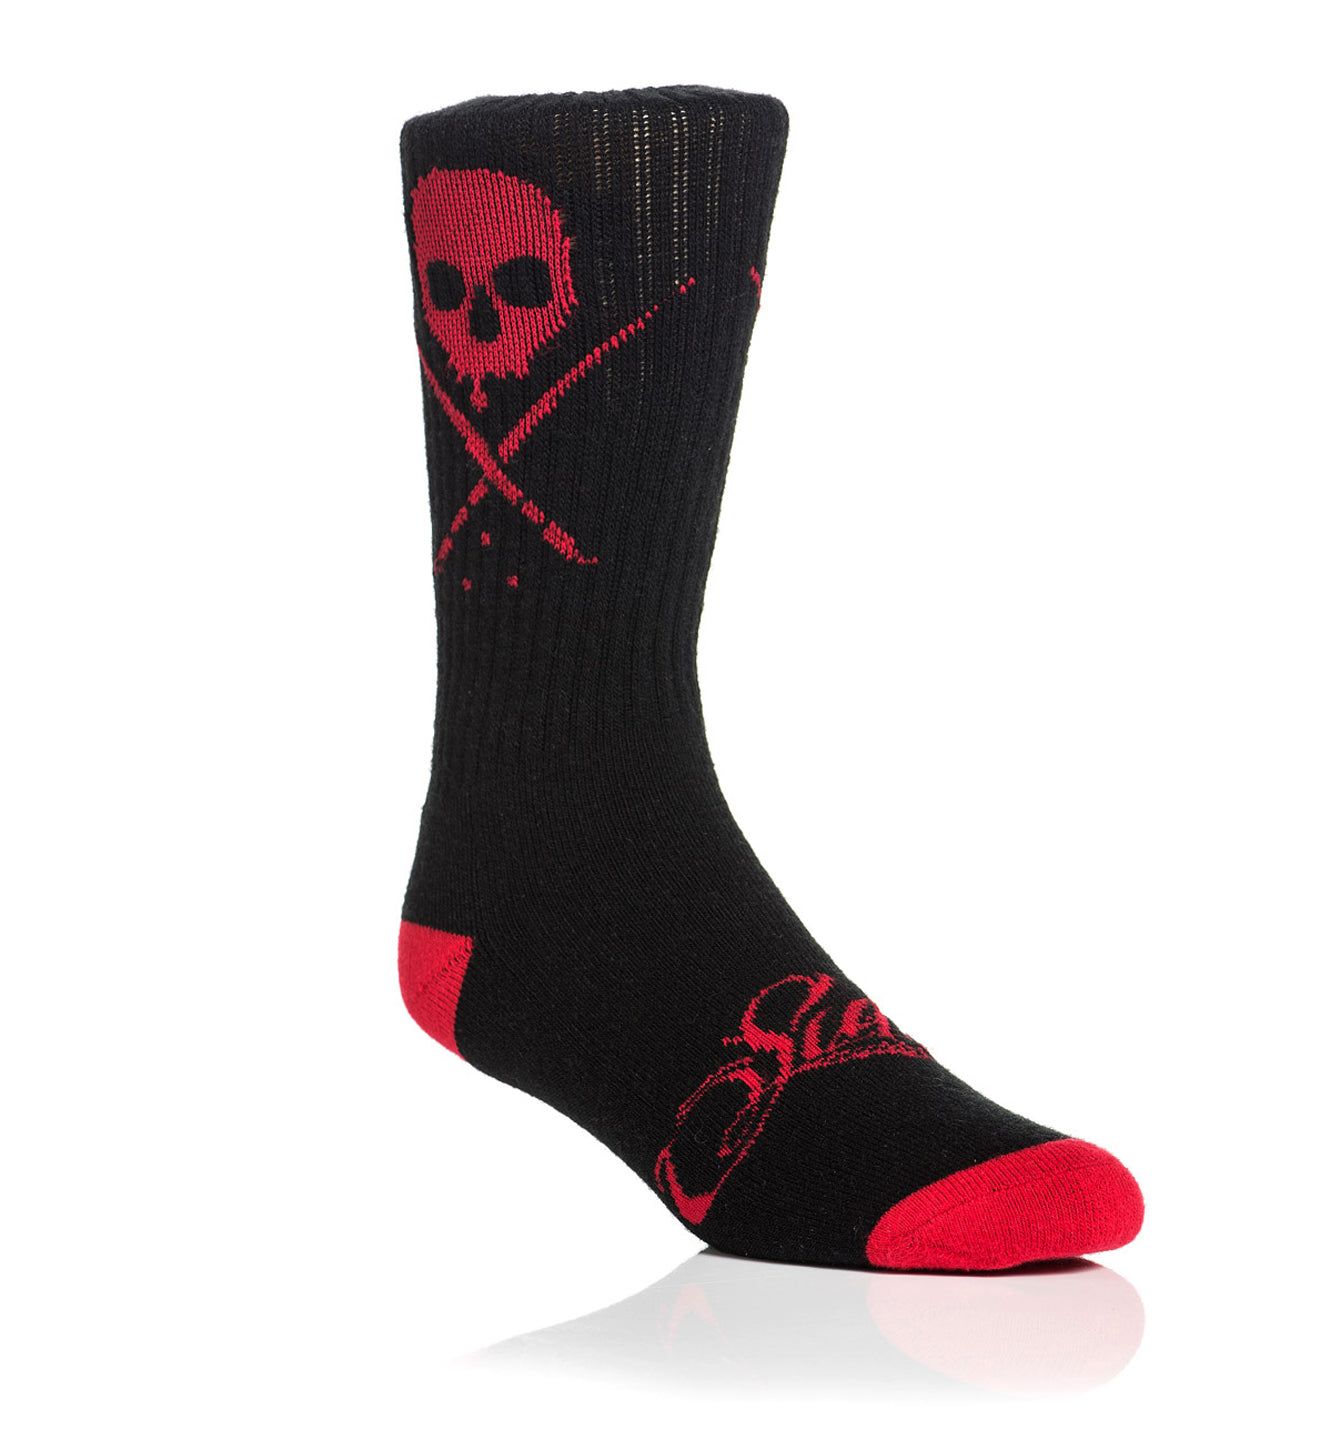 Standard Issue Socks Black/Red - 